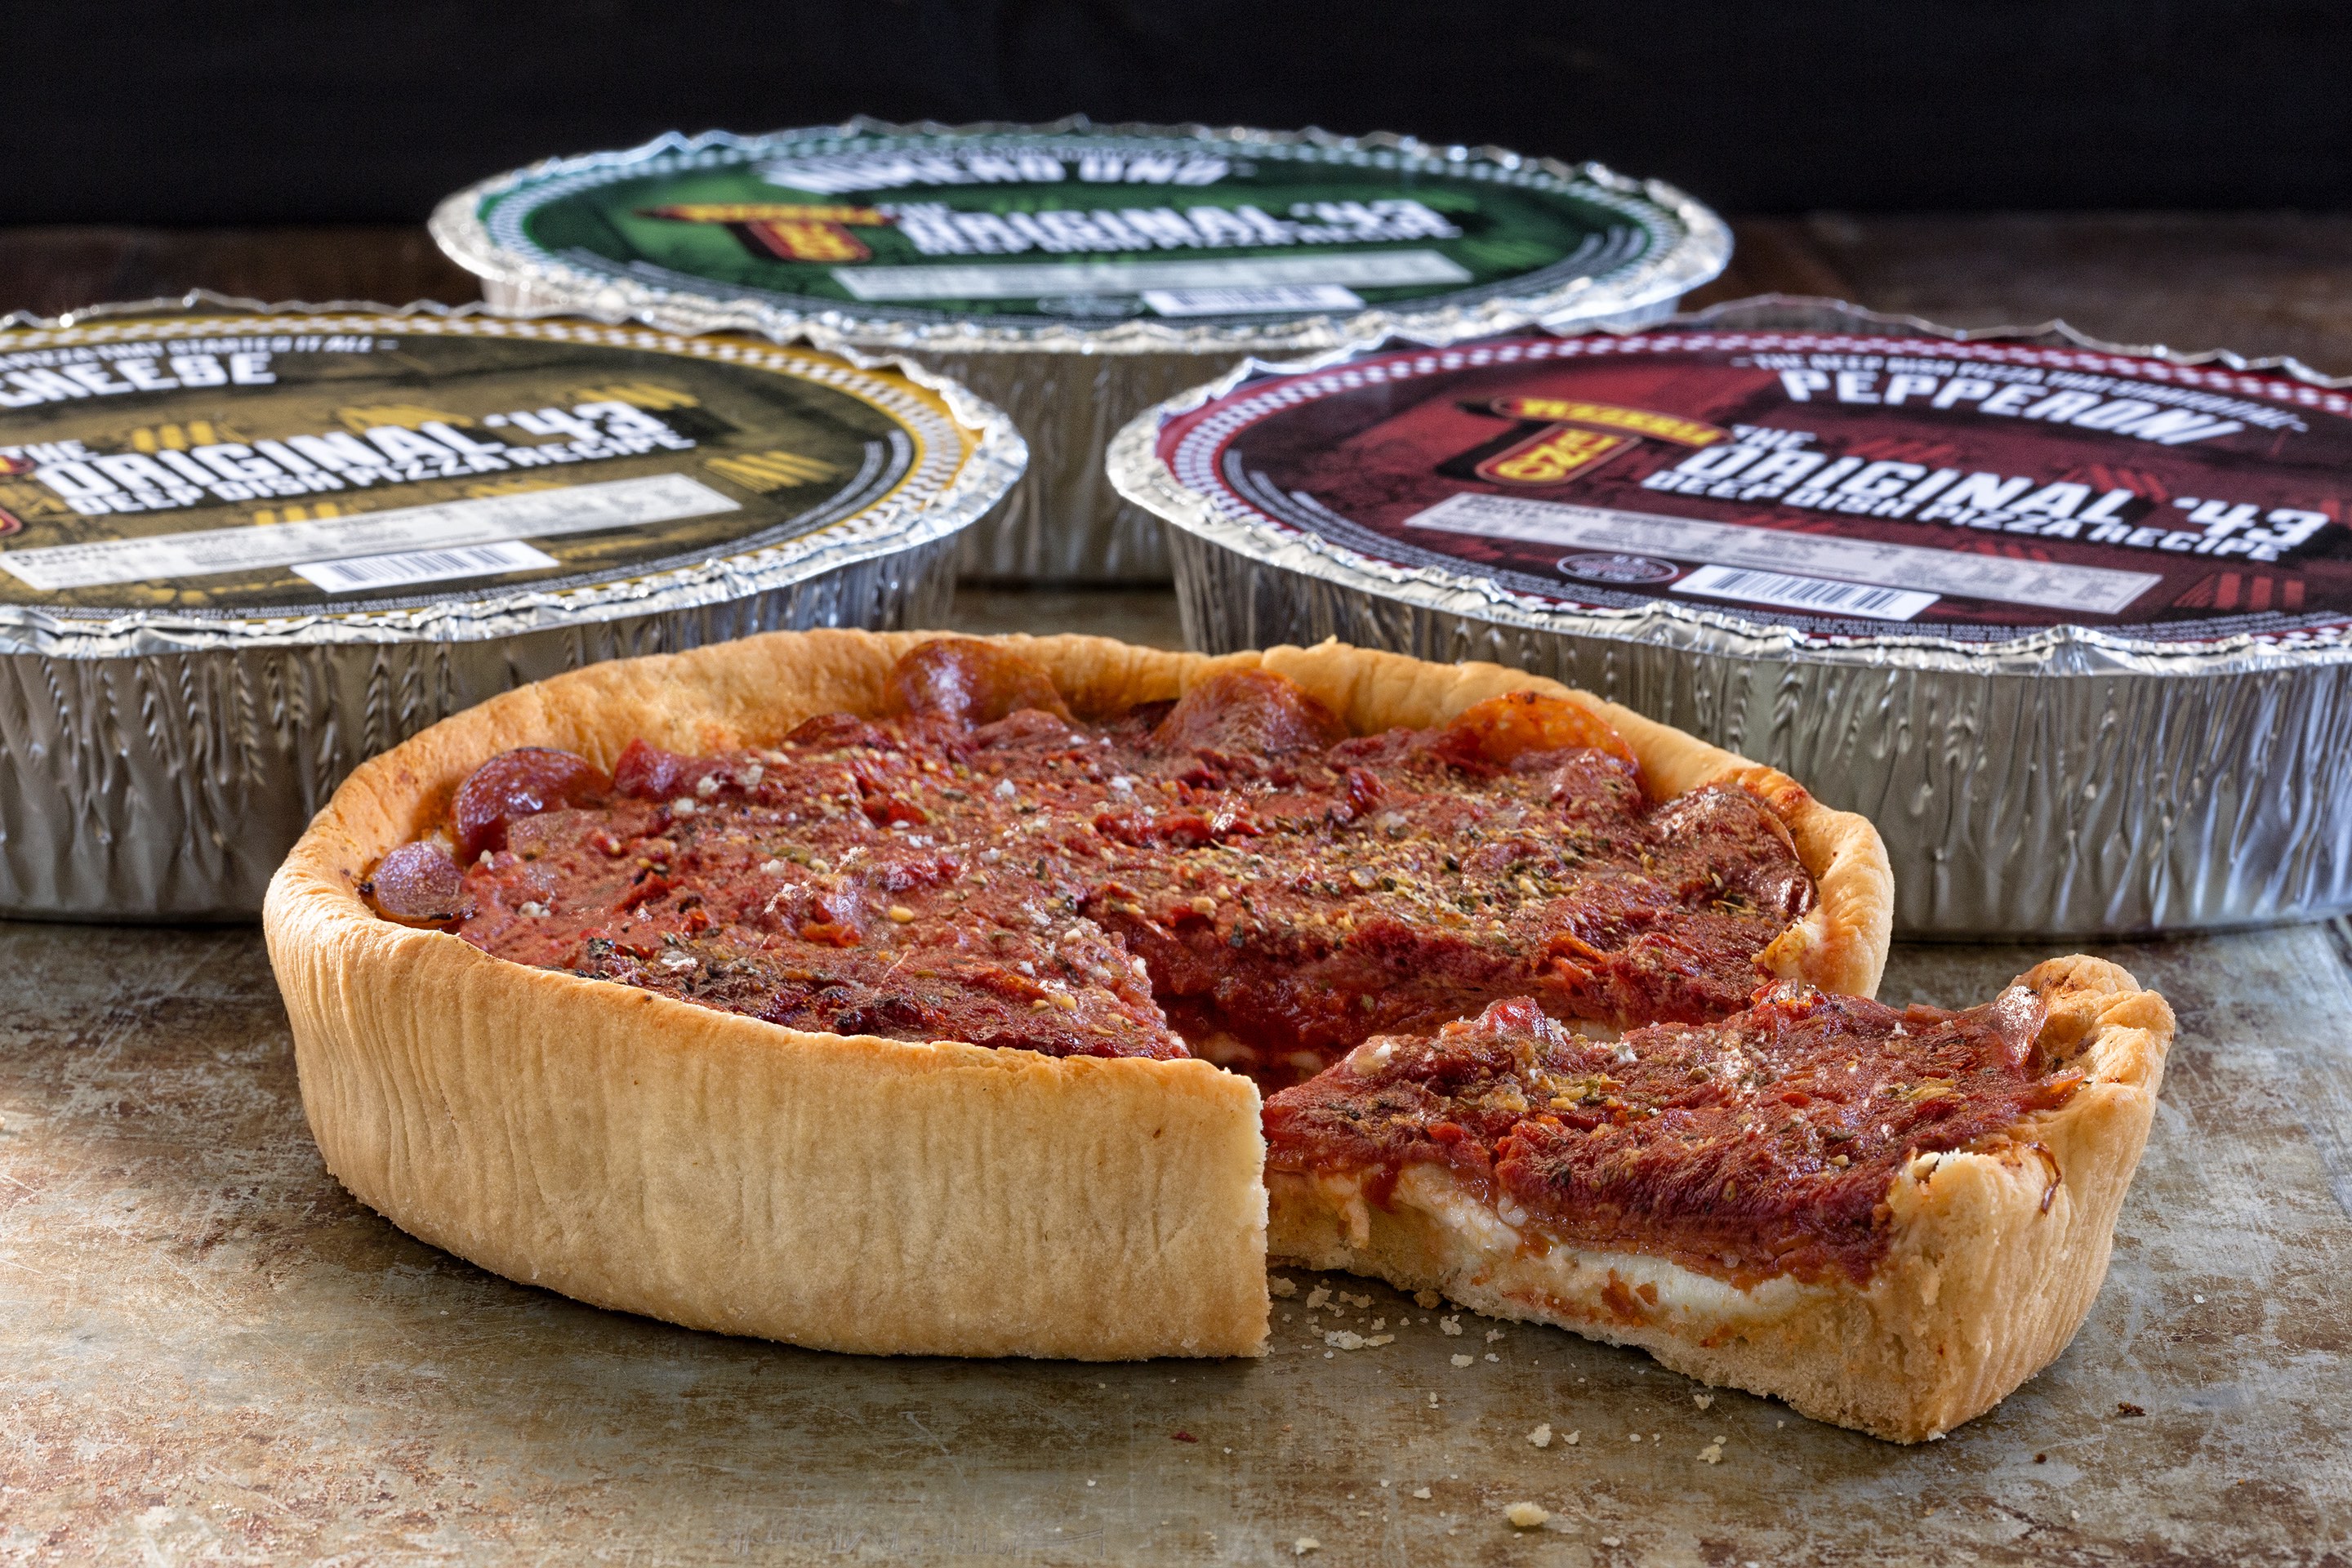 pizzeria-uno-enters-e-commerce-pizza-market-with-the-original-43-deep